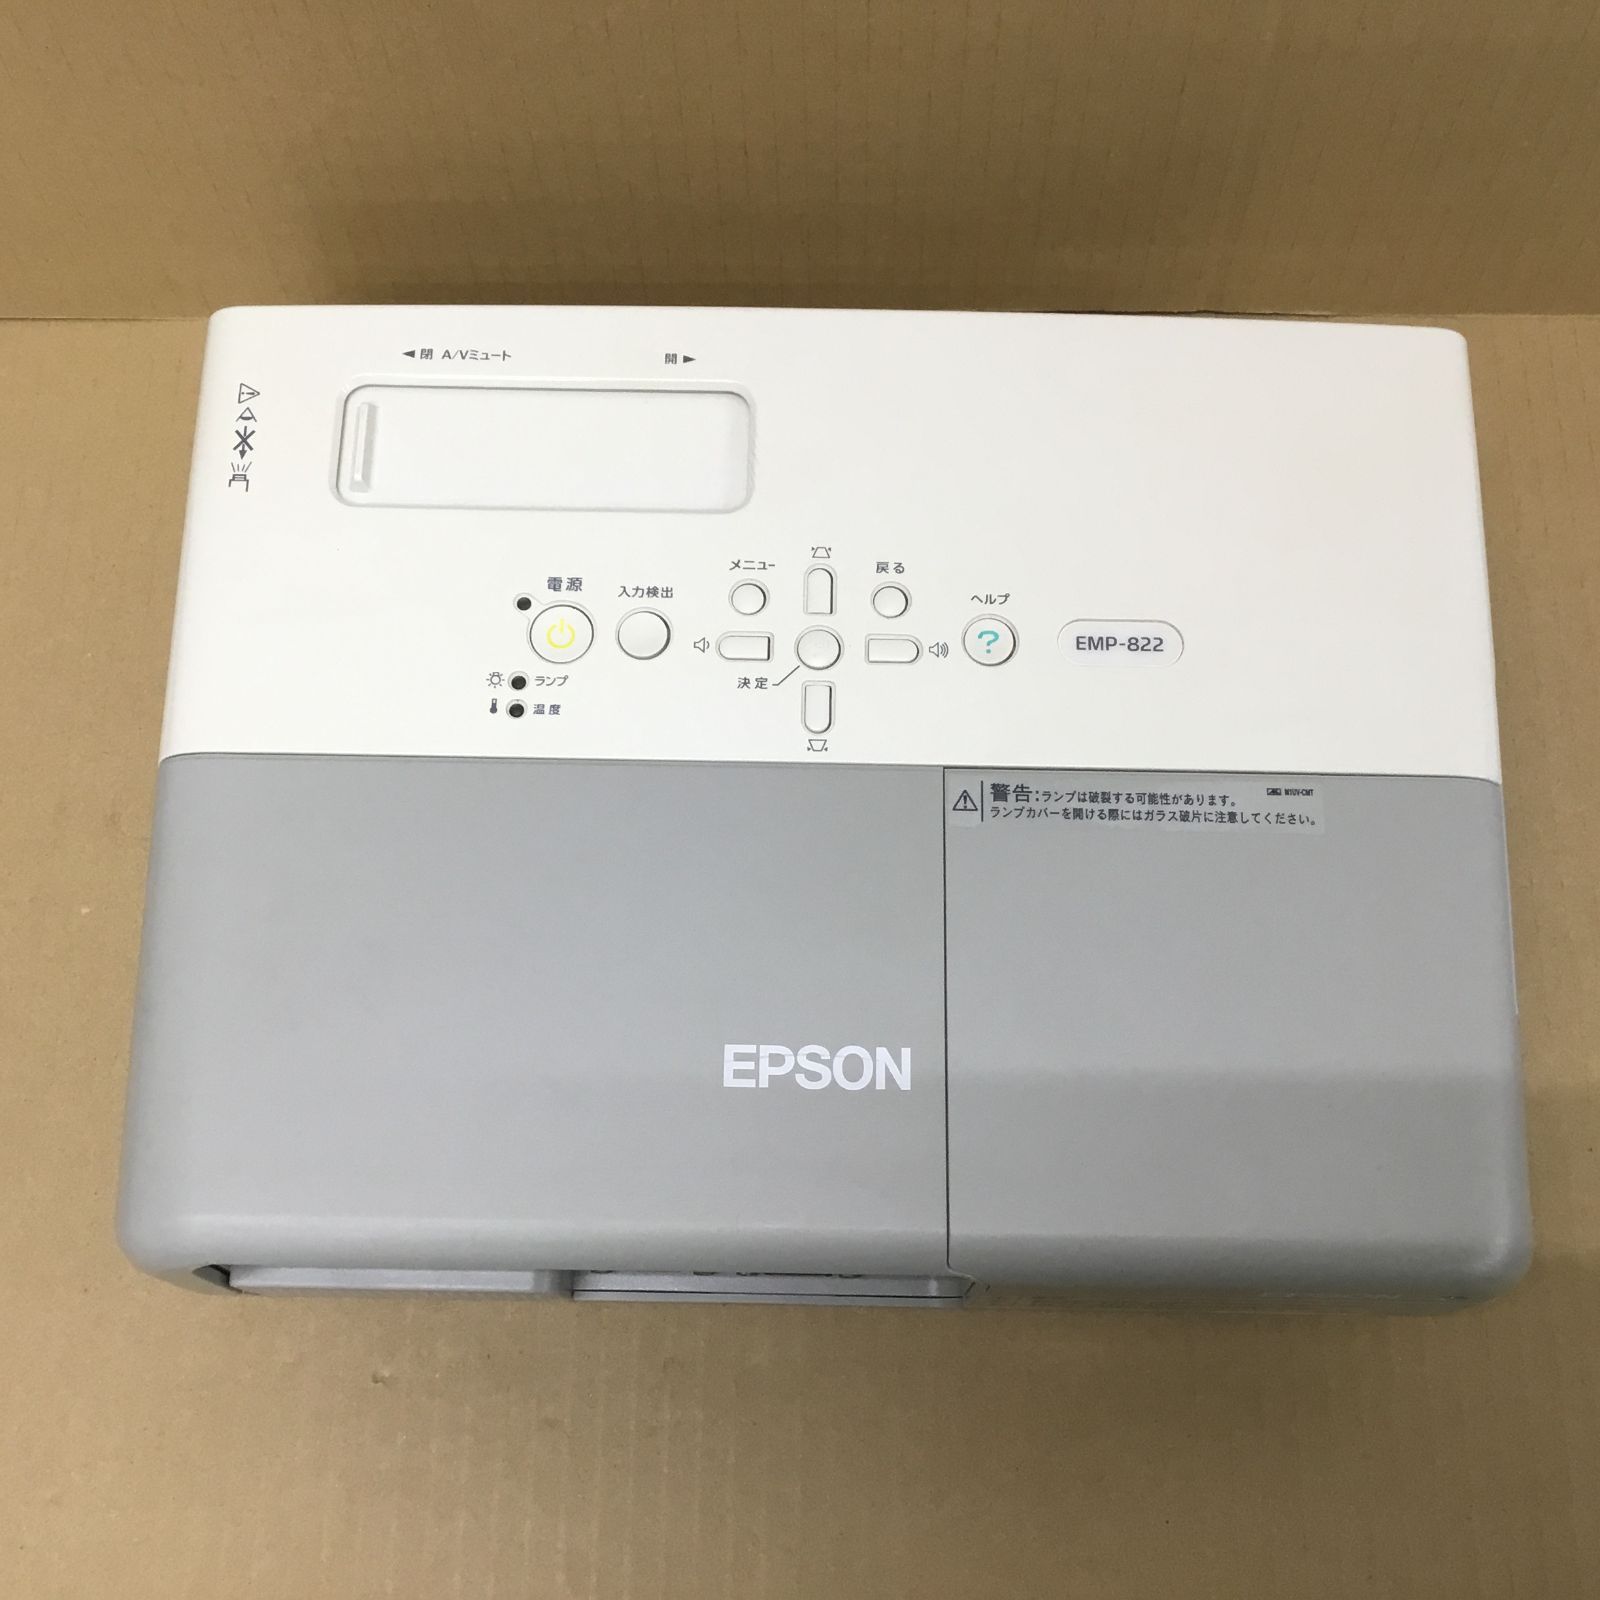 2600lm エプソンプロジェクター EPSON EMP-822 ランプ時間 48H - 映像機器